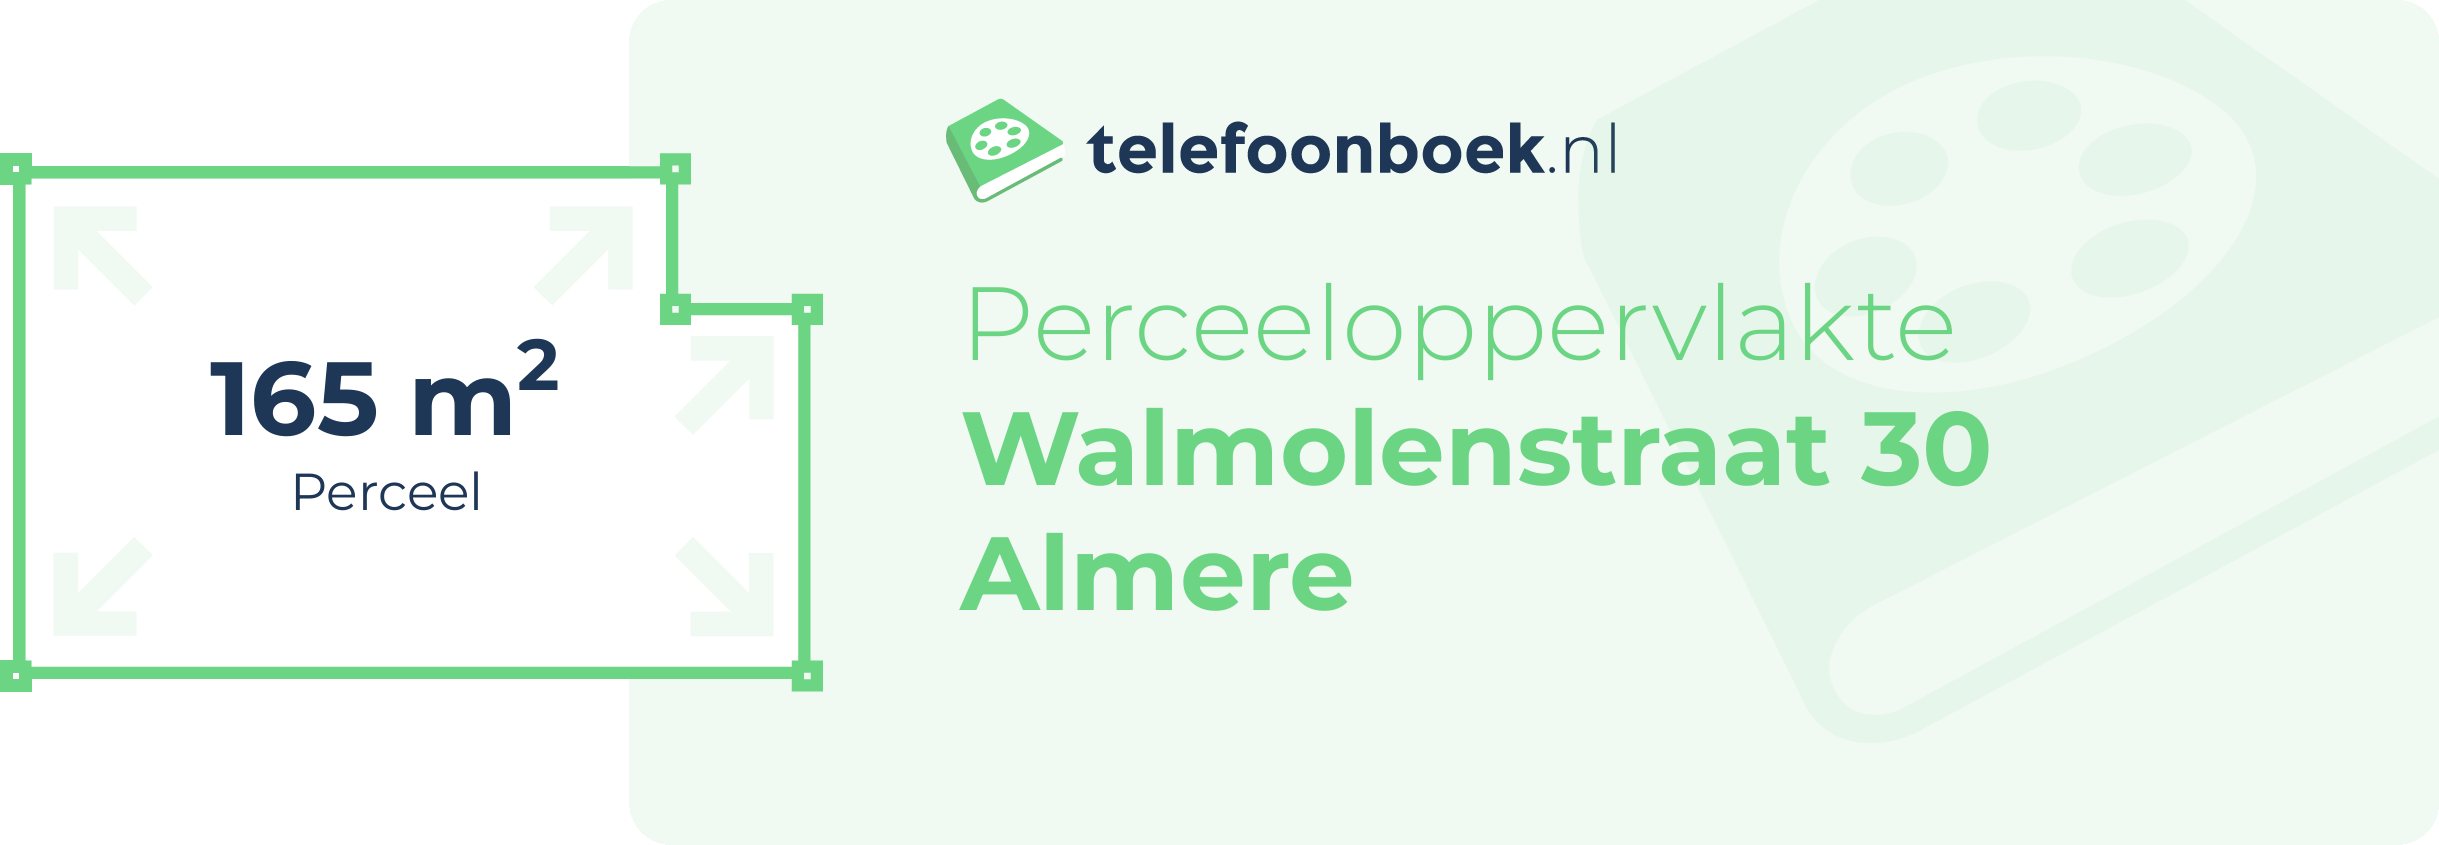 Perceeloppervlakte Walmolenstraat 30 Almere